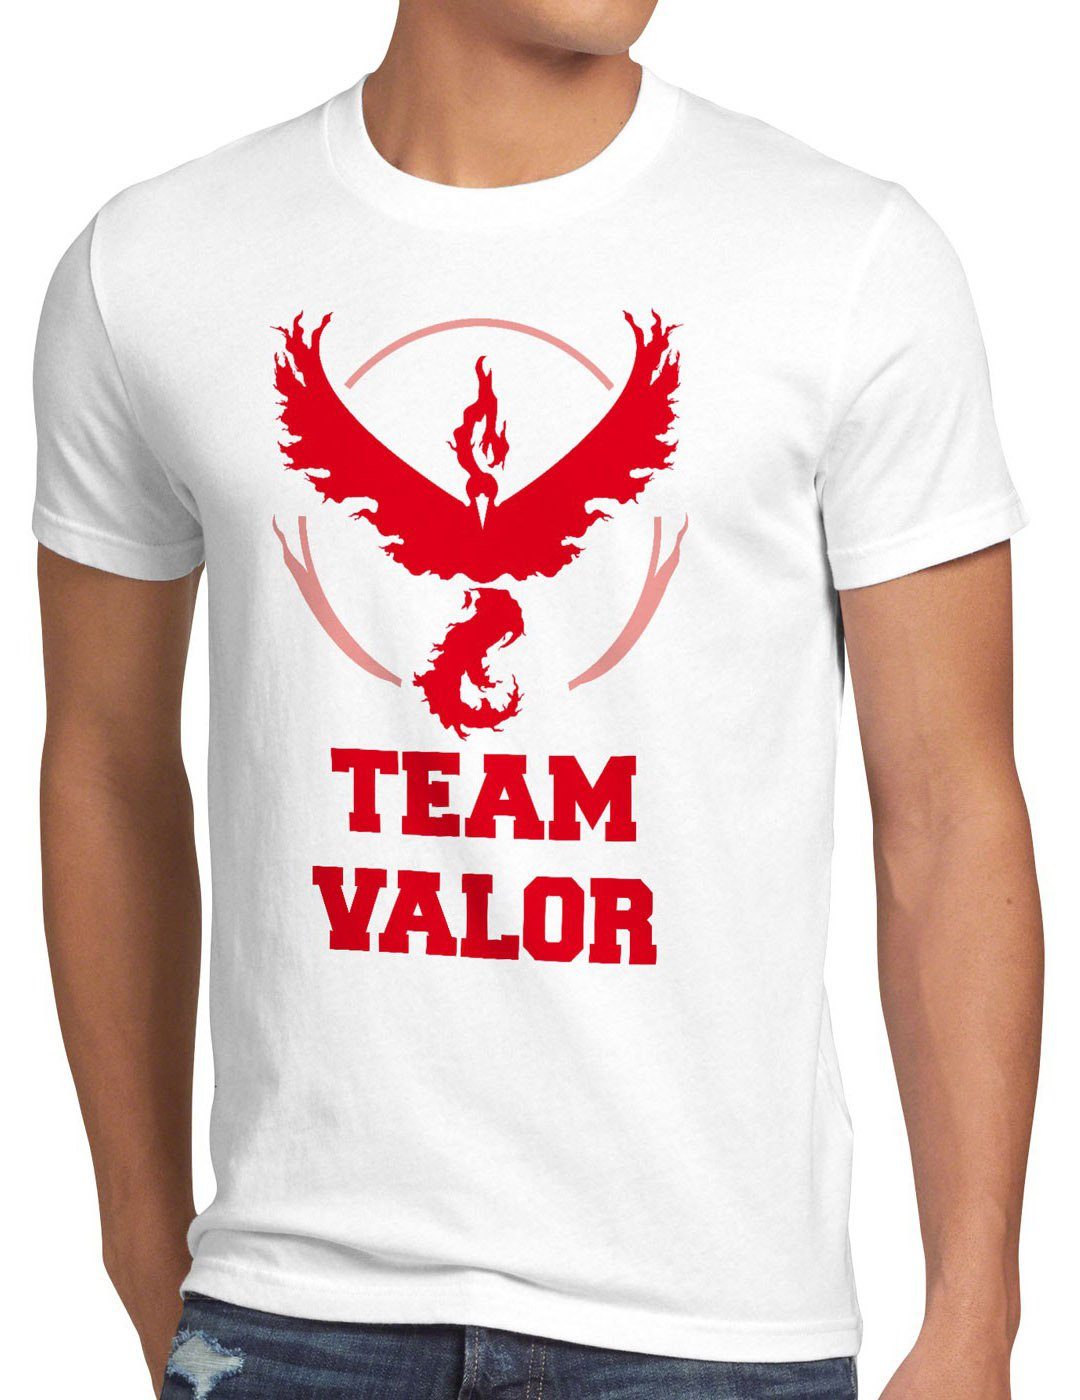 style3 Print-Shirt Herren T-Shirt Team Valor Rot Red Wagemut arena pokeball game go kampf poke ball weiß